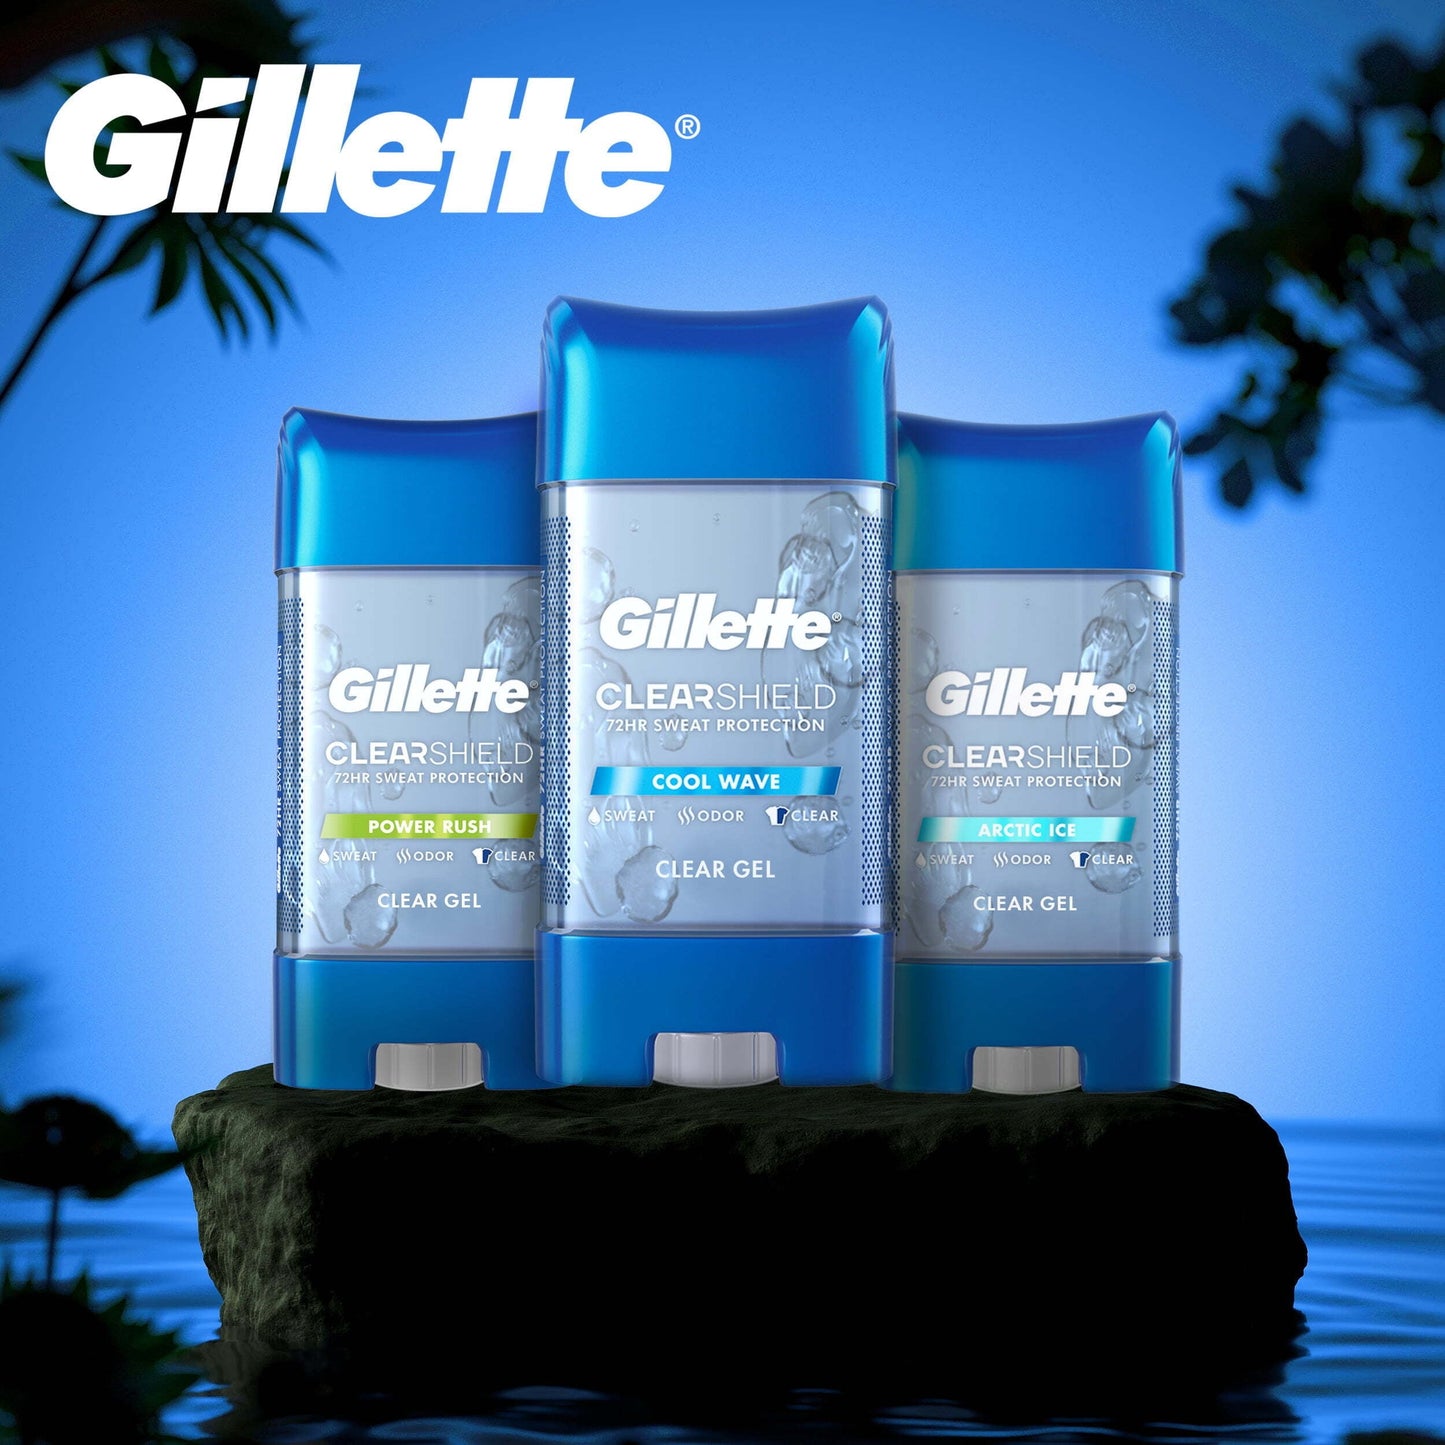 Gillette Antiperspirant Deodorant for Men, Clear Gel, Powder Rush, Twin Pack, 3.8oz